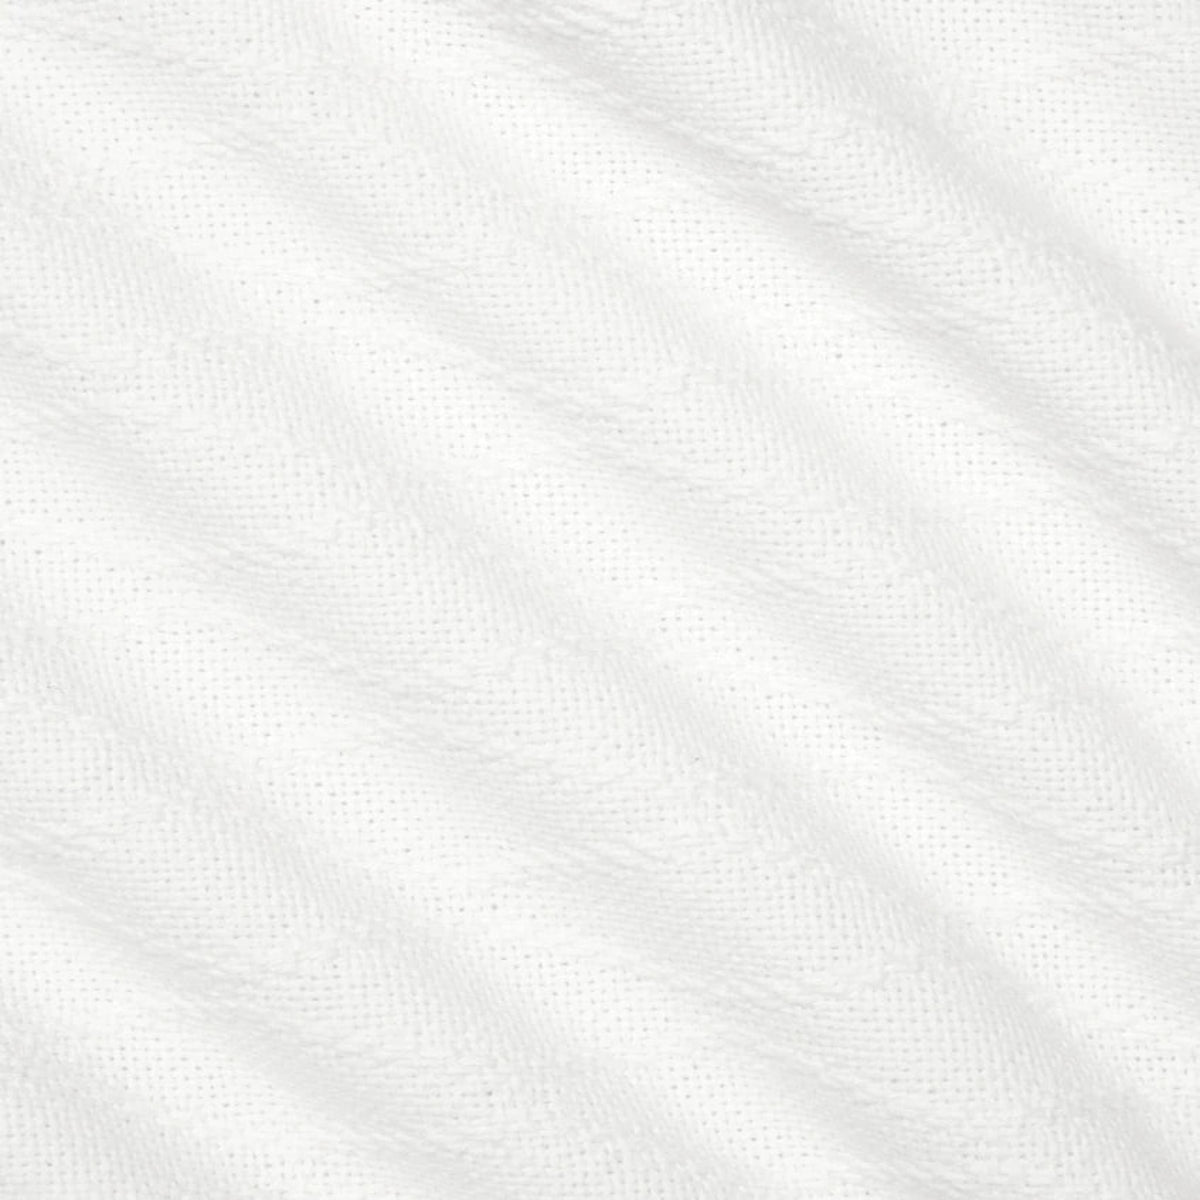 Swatch Sample of Sferra Cetara Bedding White Color